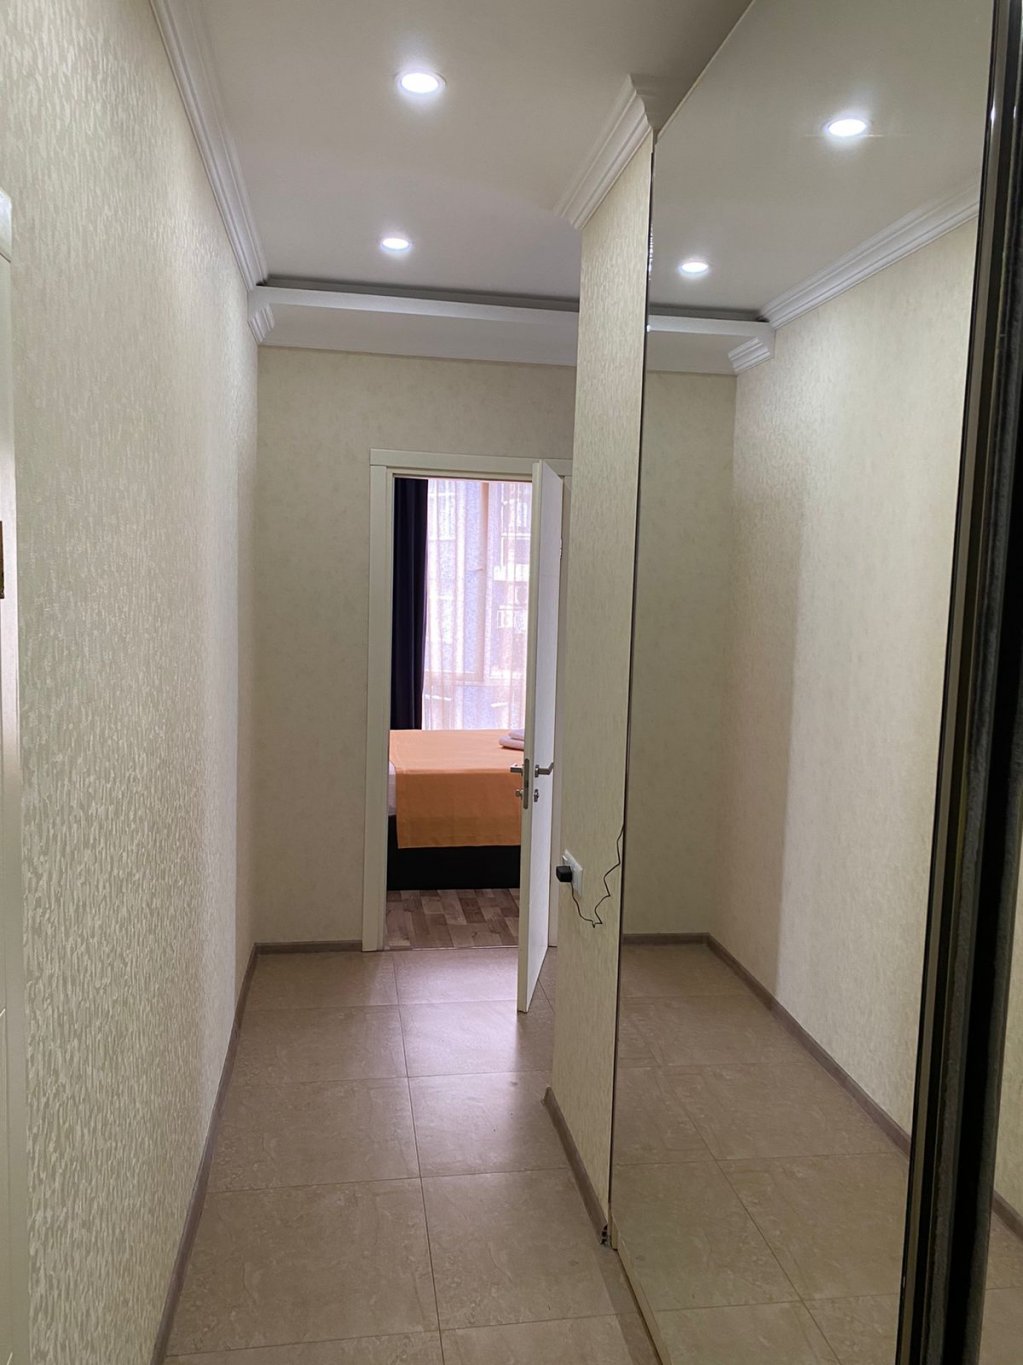 1-bedroom apartment "Nice" with sea view id-1056 - Batumi Vacation Rentals